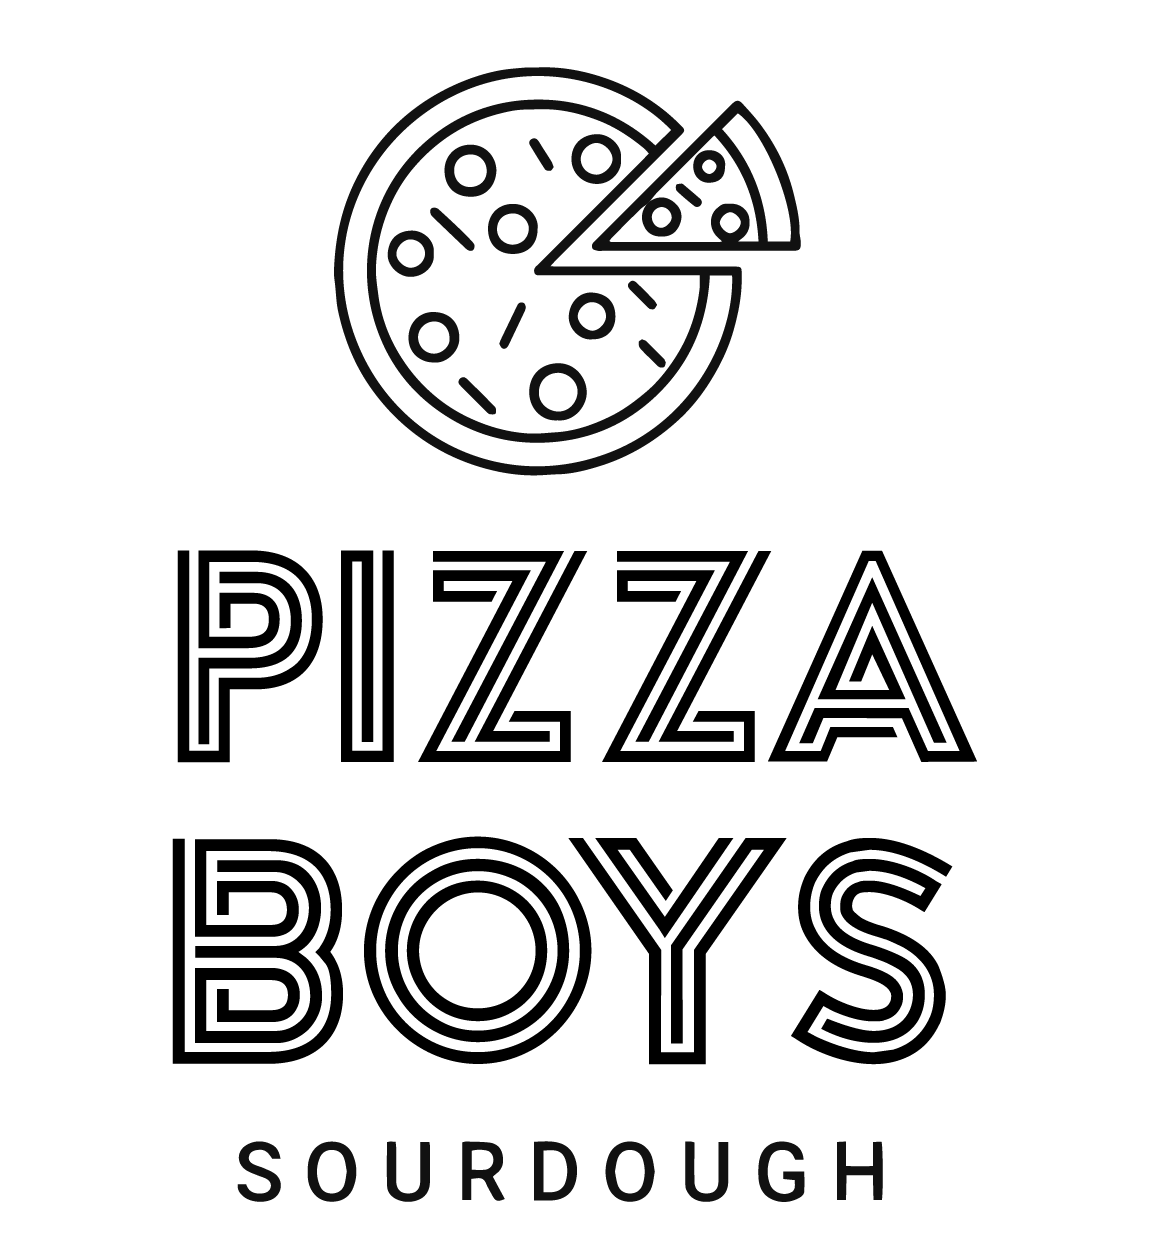 Pizza Boys - Sourdough